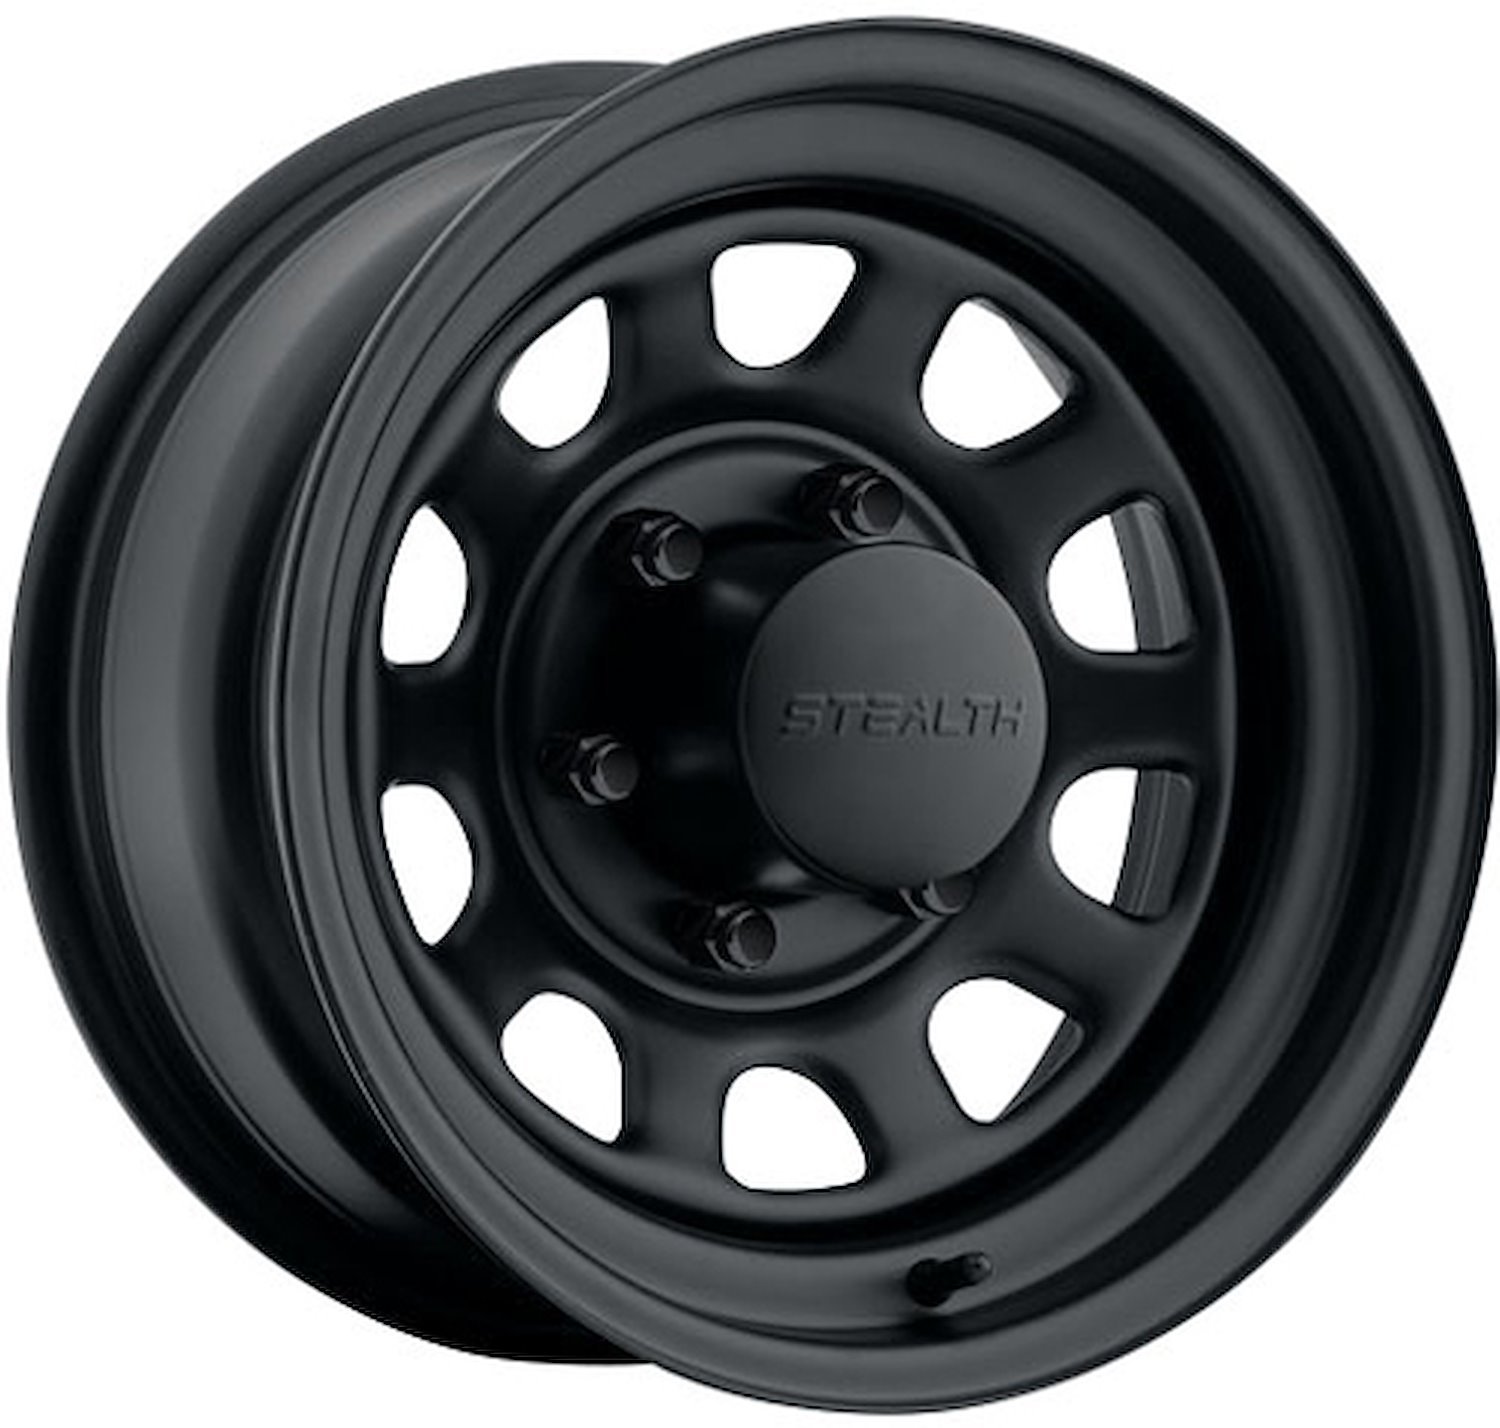 Stealth Black Daytona Wheel (Series 804) Size: 15" x 10"